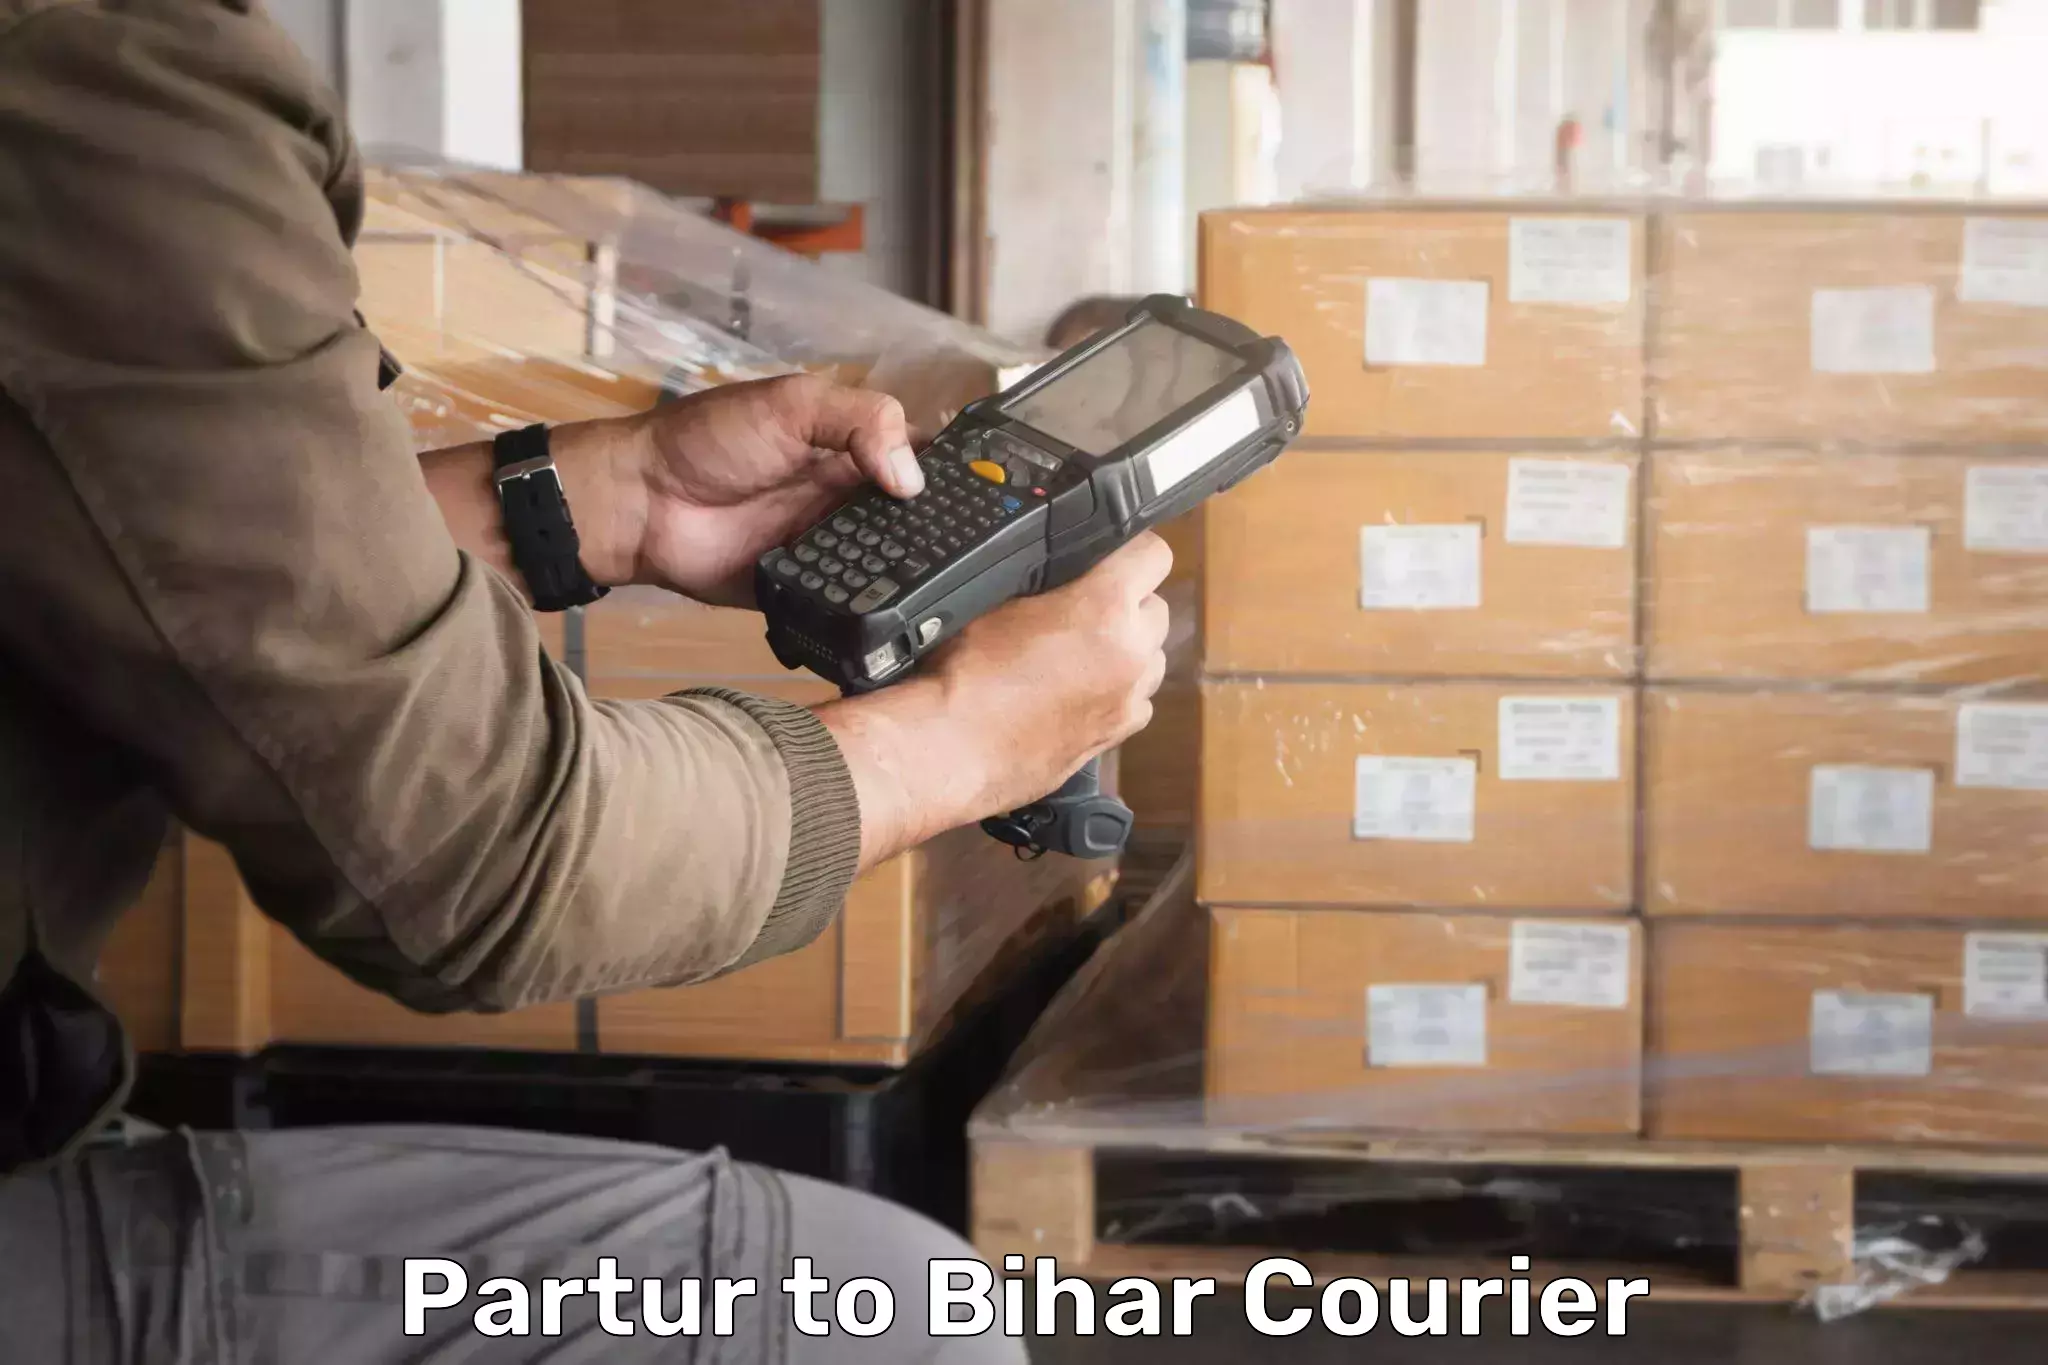 Pharmaceutical courier Partur to Bihar